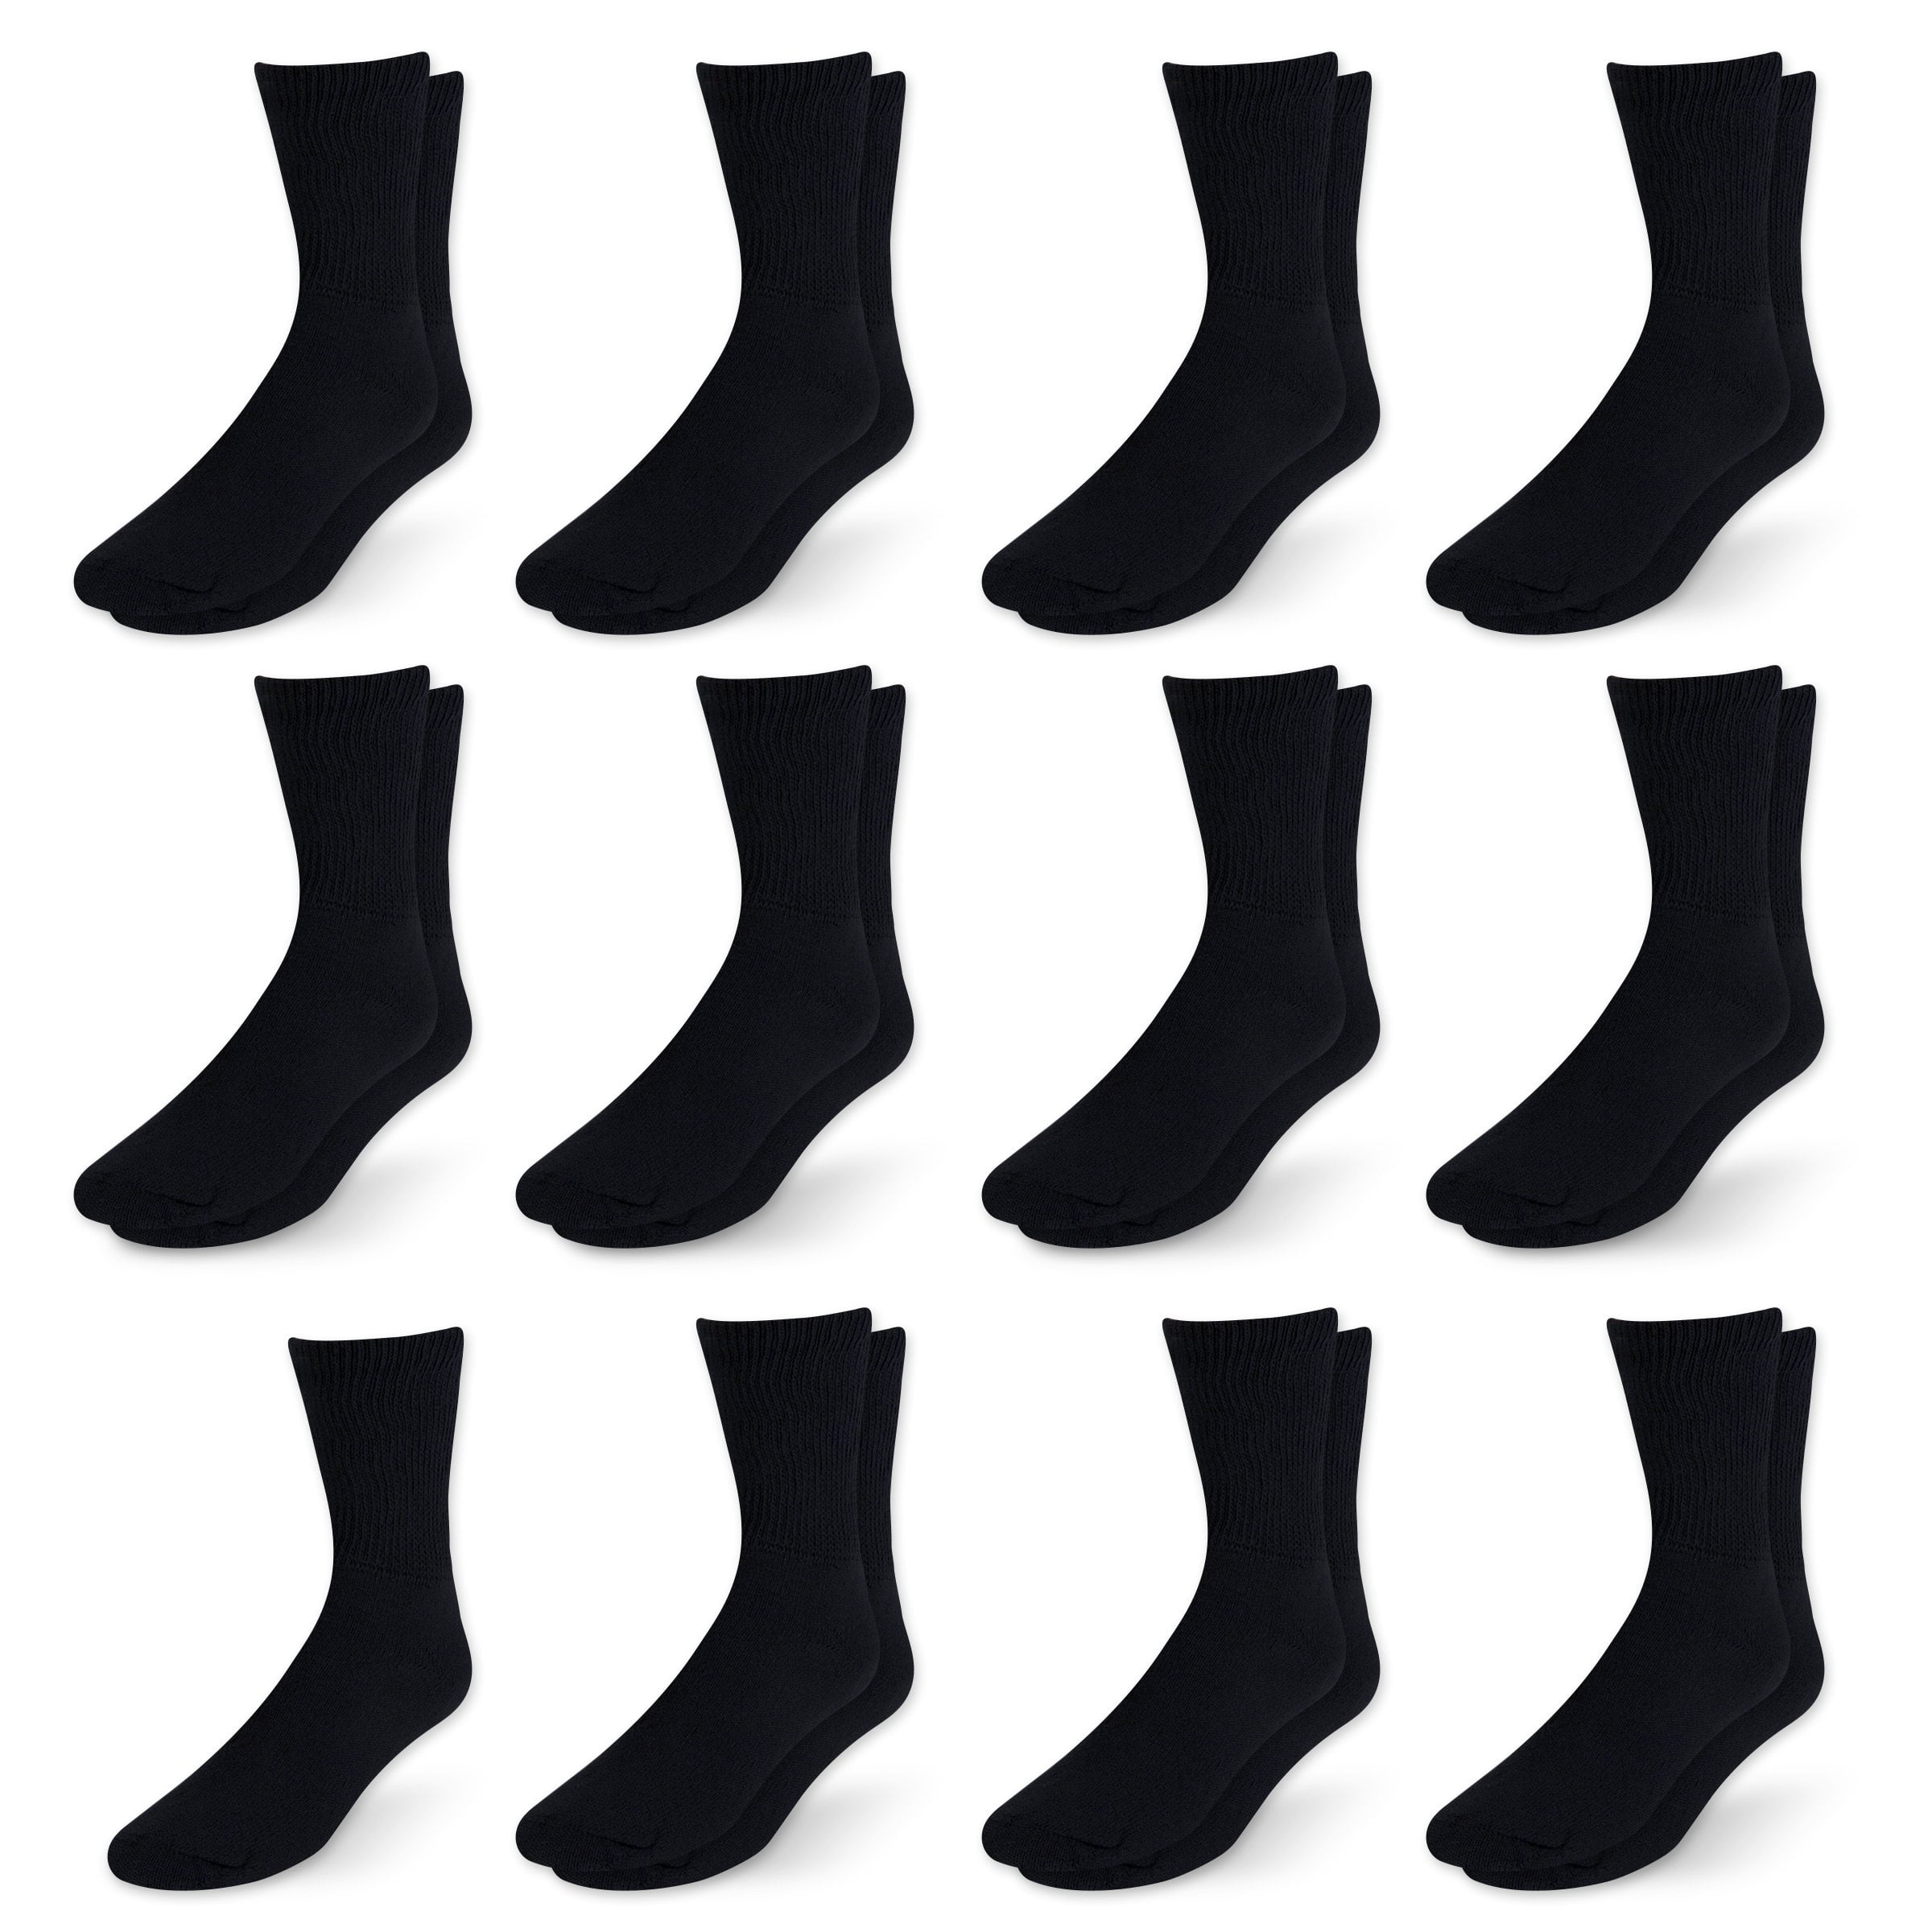 Men's Diabetic Cotton Crew Socks - Loose Fitting Non-Binding Top ...